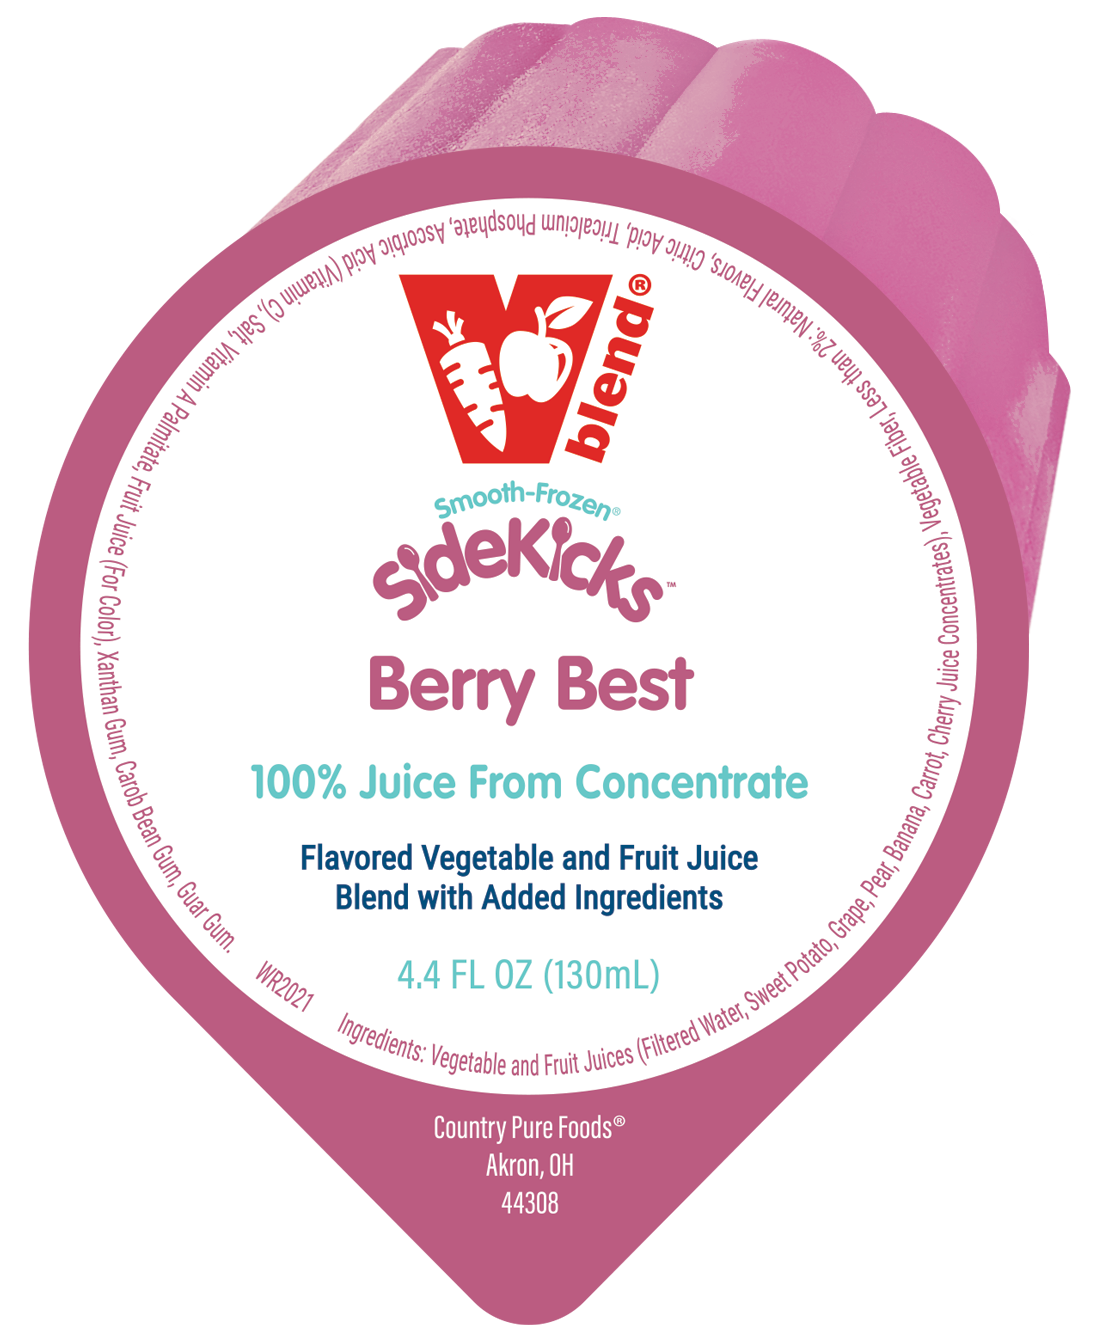 Smooth-Frozen SideKicks Berry Best